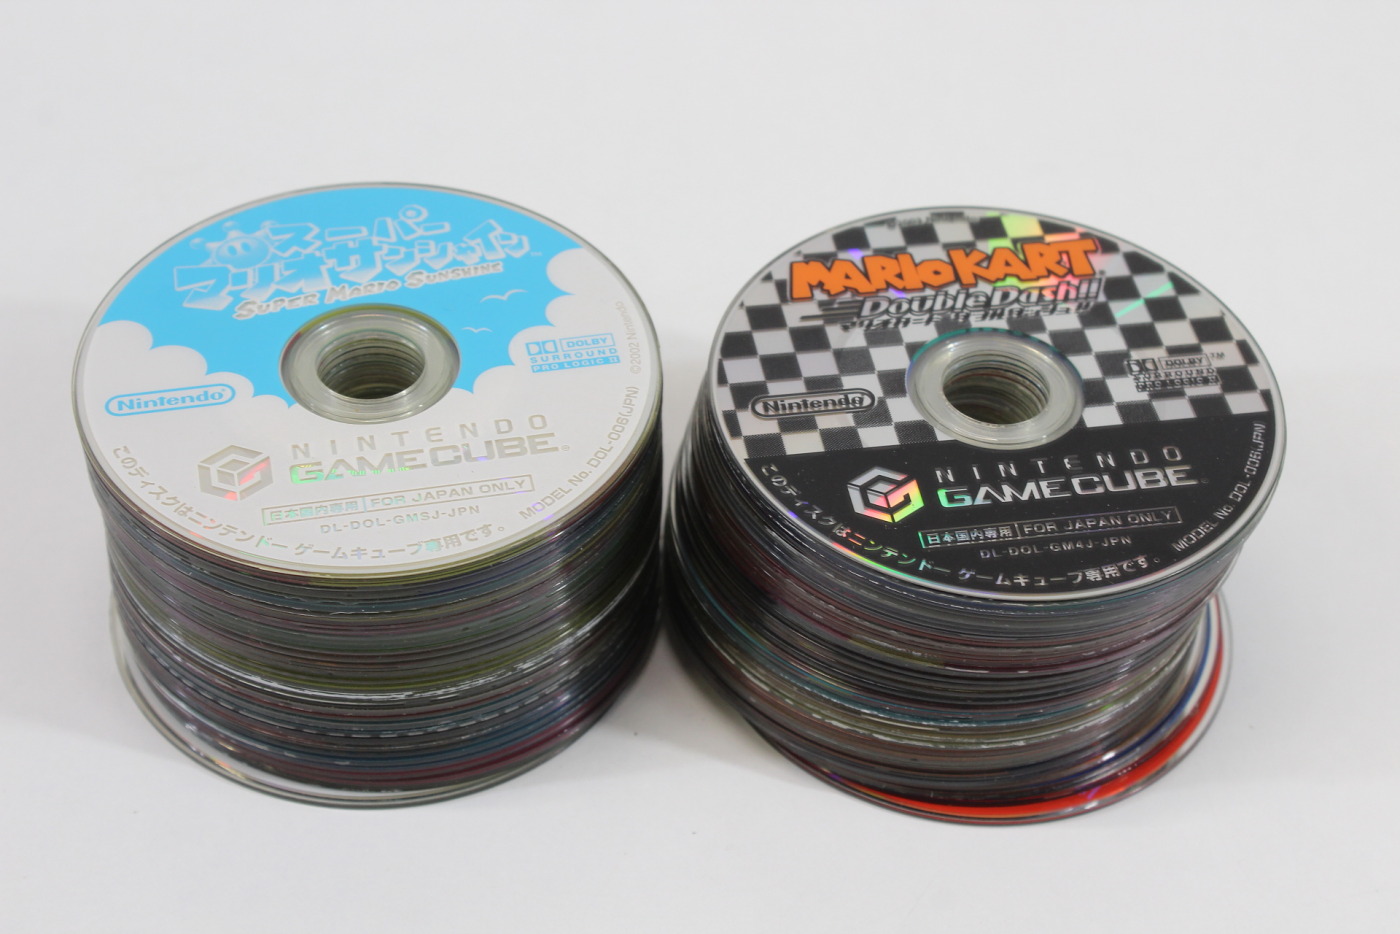 Wholesale Lot of 64 Japanese Nintendo GameCube Games NTSC-J Discs 